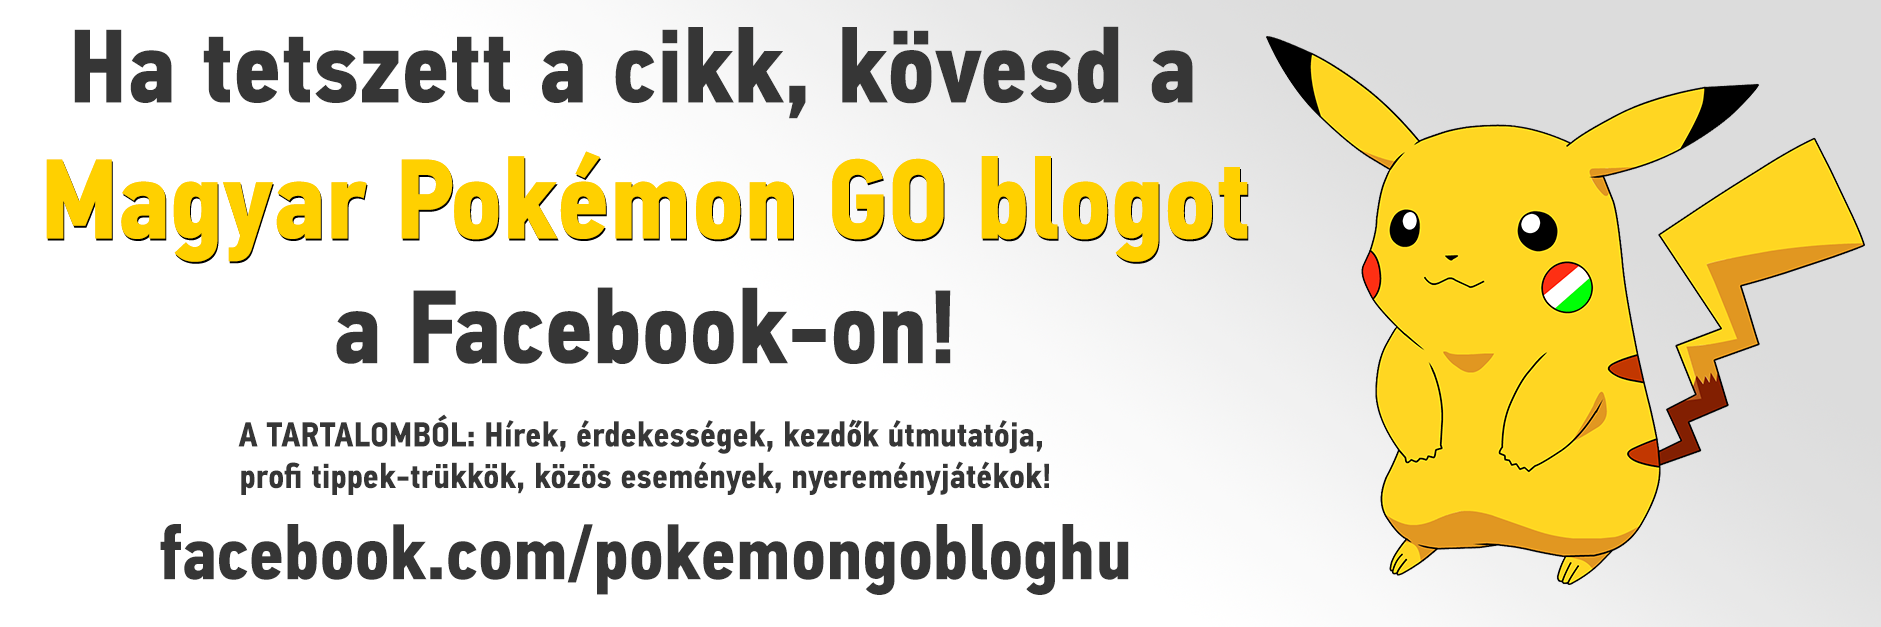 magyar_pokemon_go_blog_facebook.png